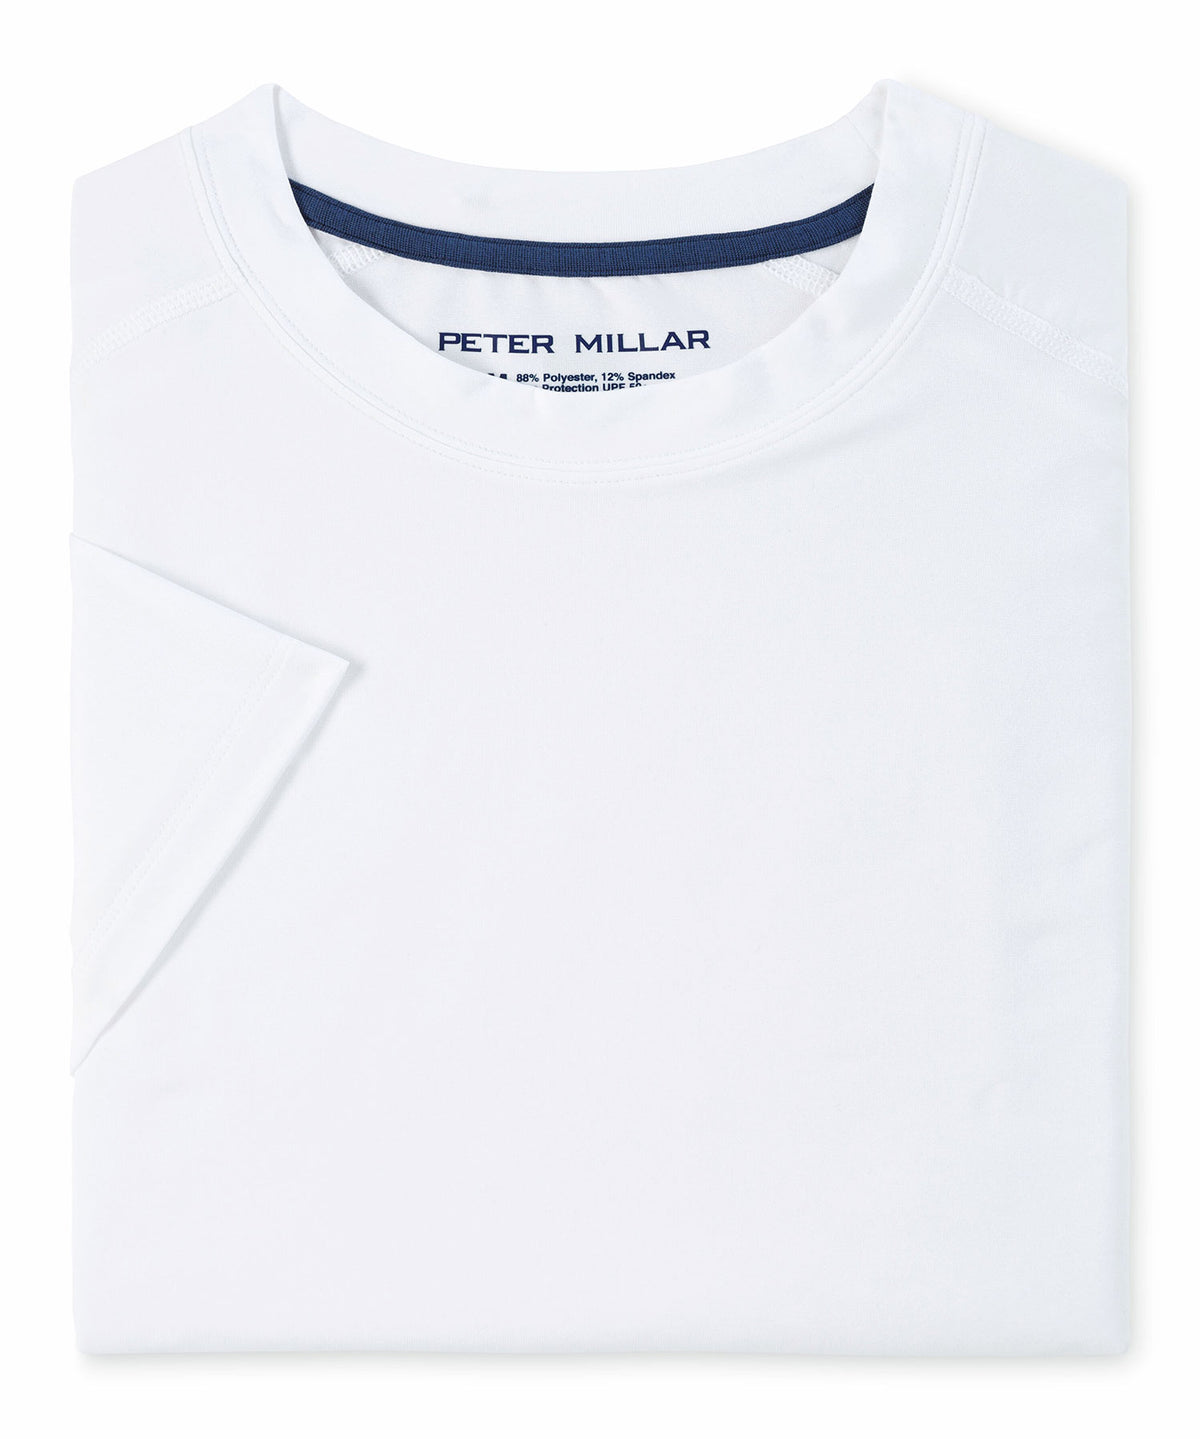 Peter Millar Aurora T-Shirt, Men's Big & Tall